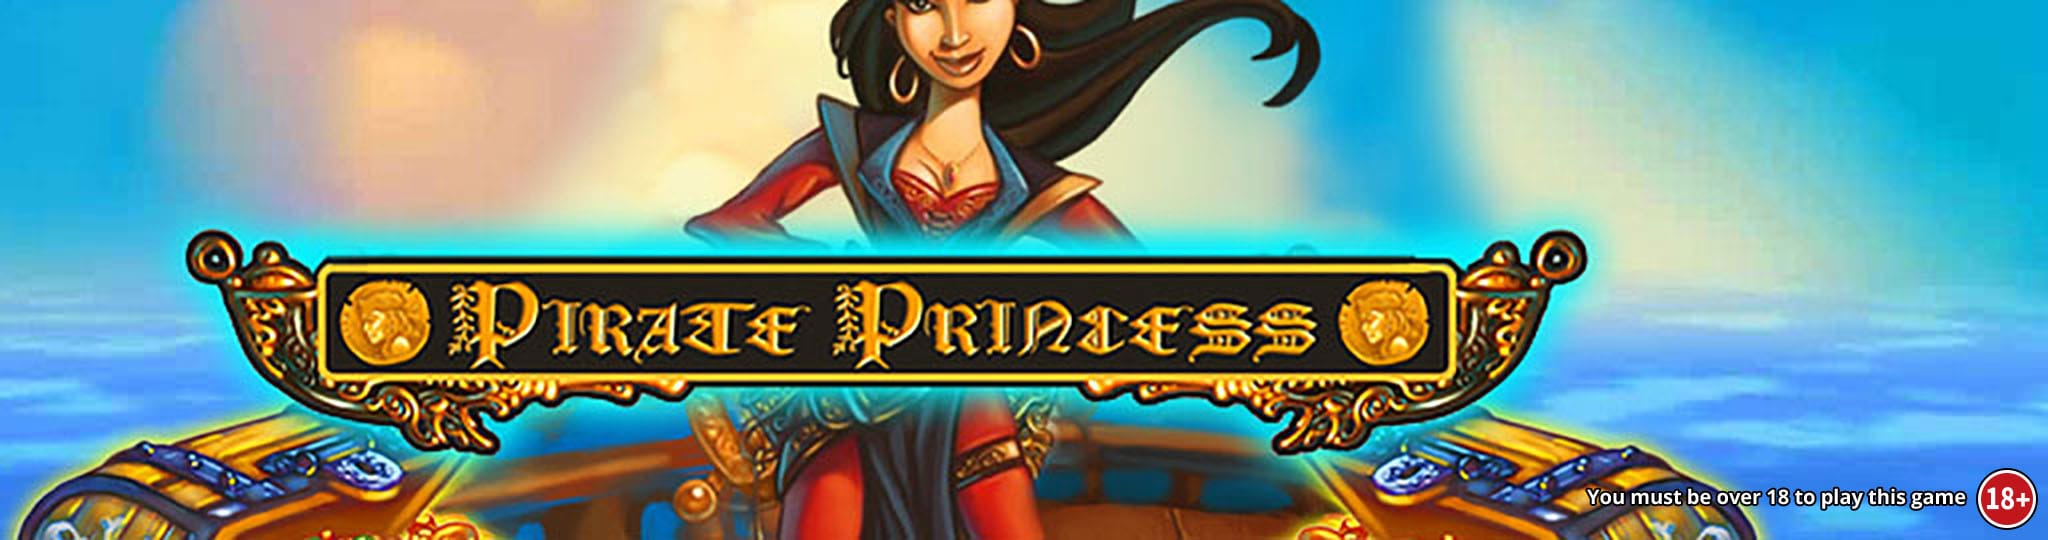 Pirate Princess Slot Machine